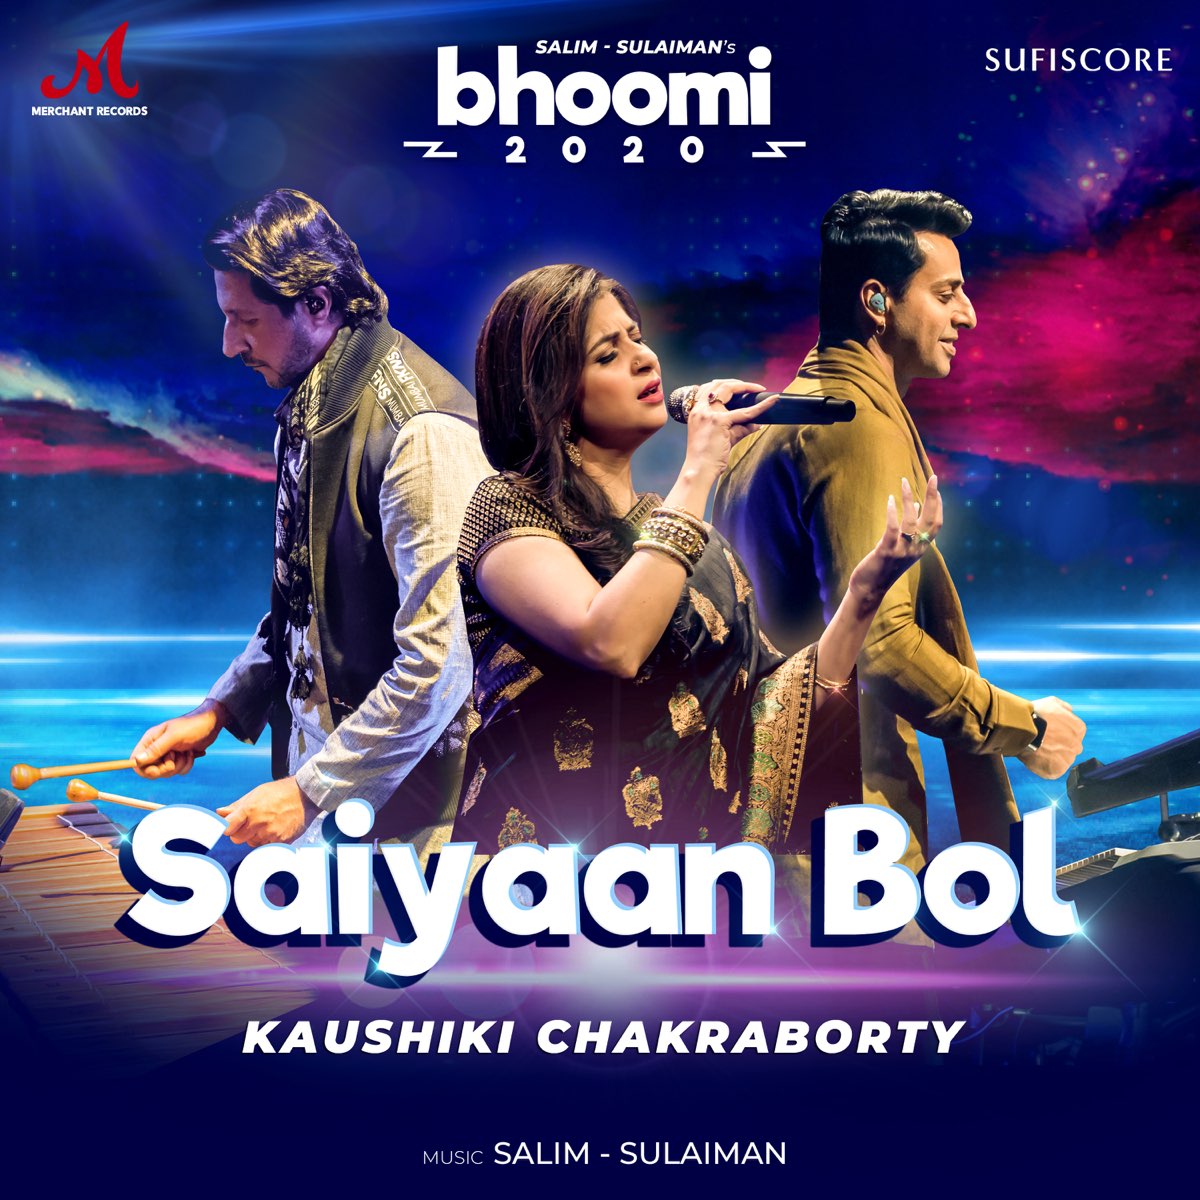 Saiyaan Bol - Single by Salim-Sulaiman & Kaushiki Chakraborty on Apple Music